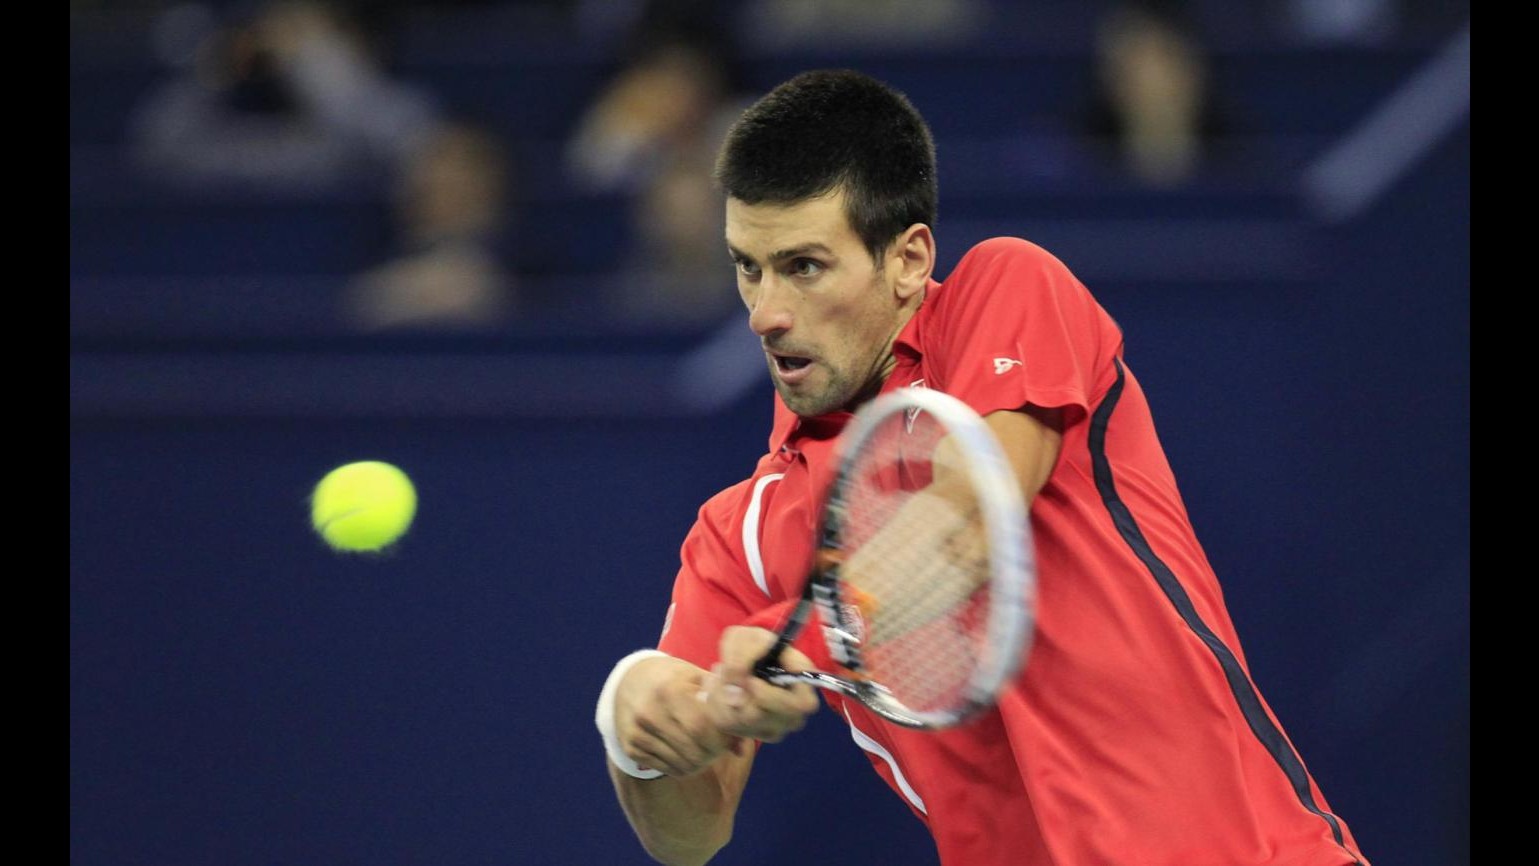 Tennis, Atp Shanghai: Novak Djokovic trionfa in rimonta su Murray